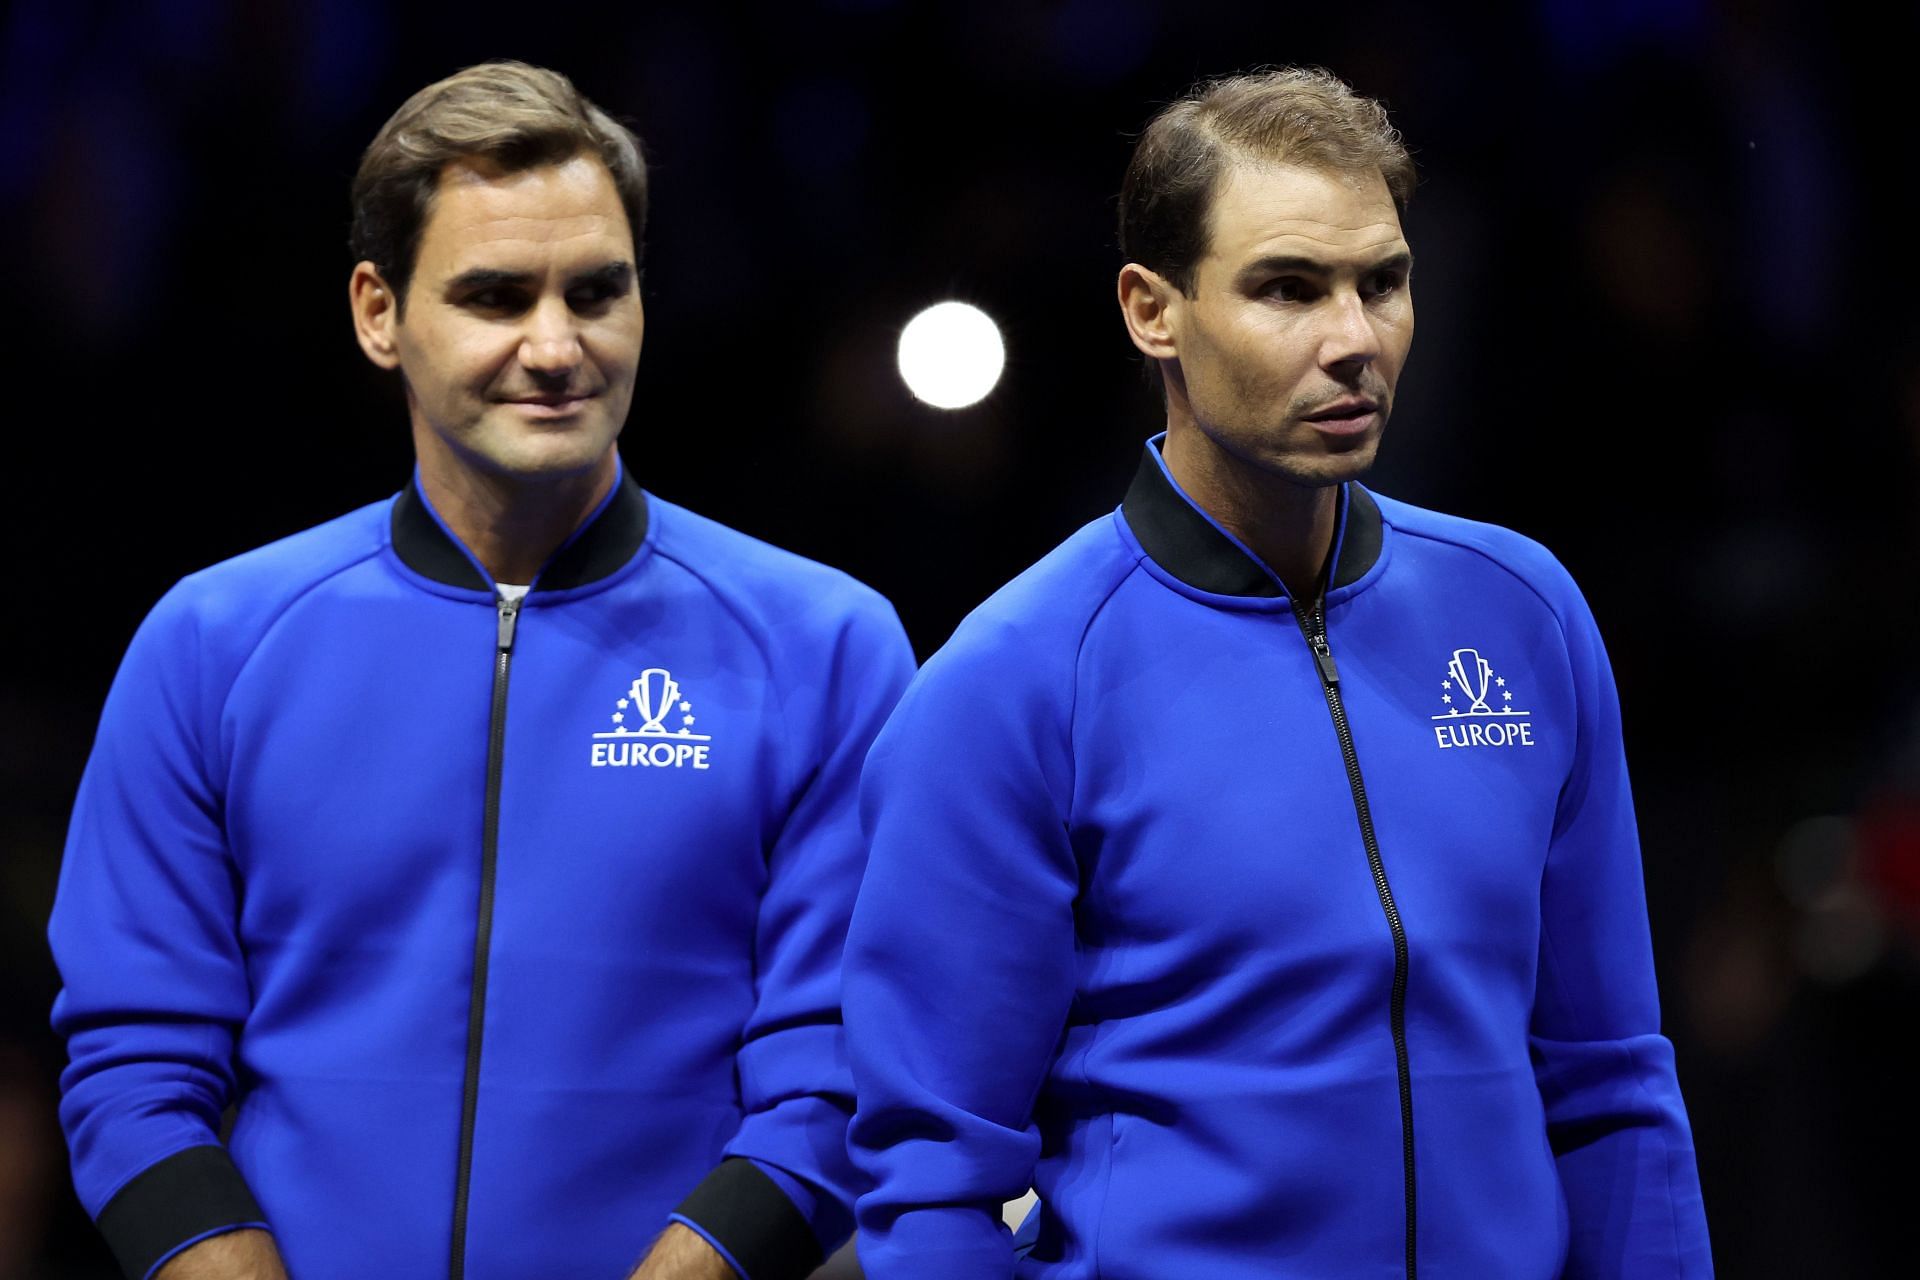 The Swiss (L) and Rafael Nadal